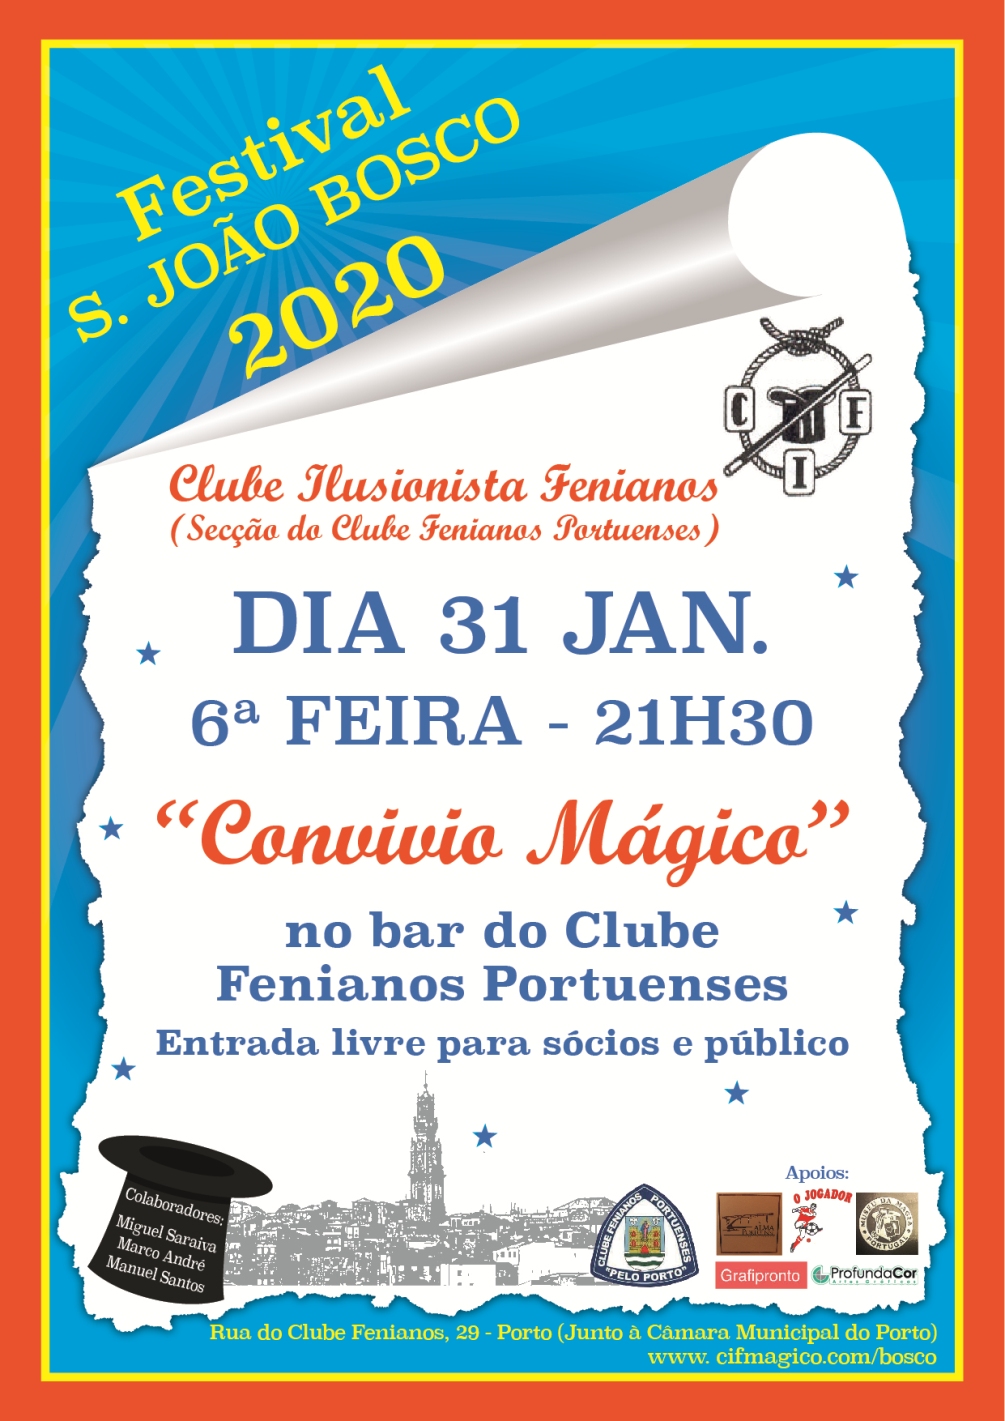 S. João Bosco Prestidigitation Festival